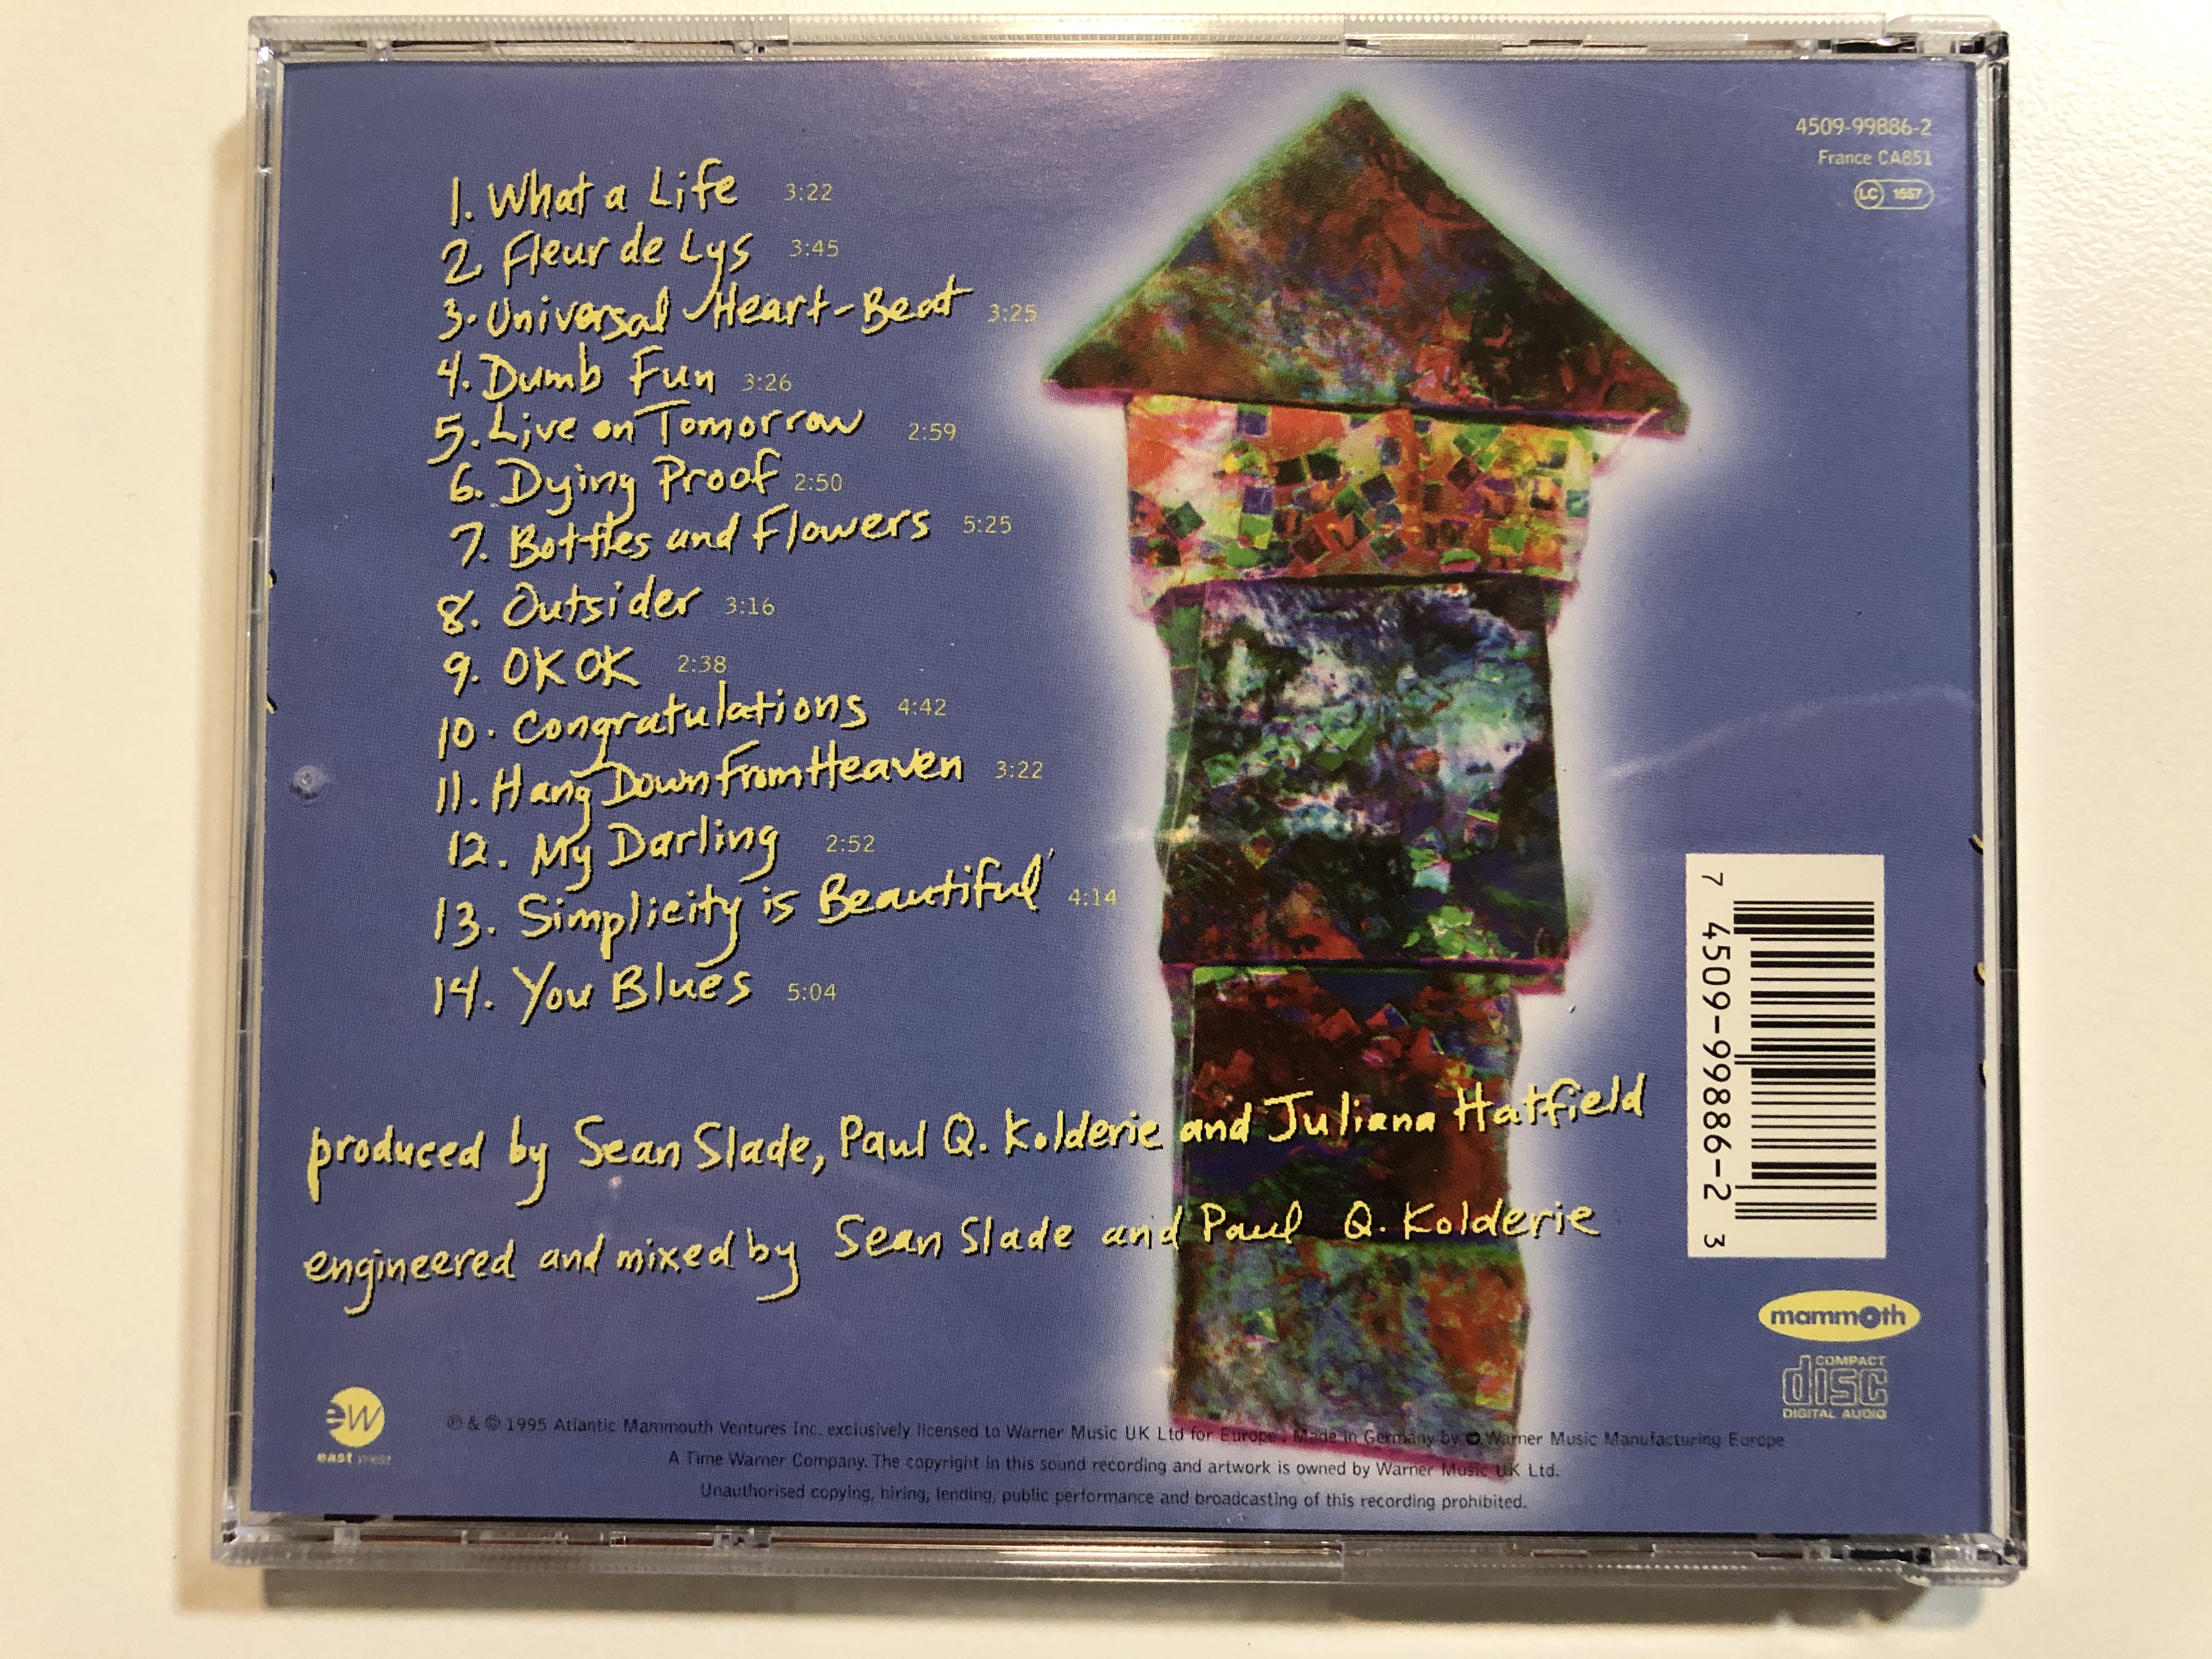 juliana-hatfield-only-everything-eastwest-audio-cd-1995-4509-99886-2-4-.jpg